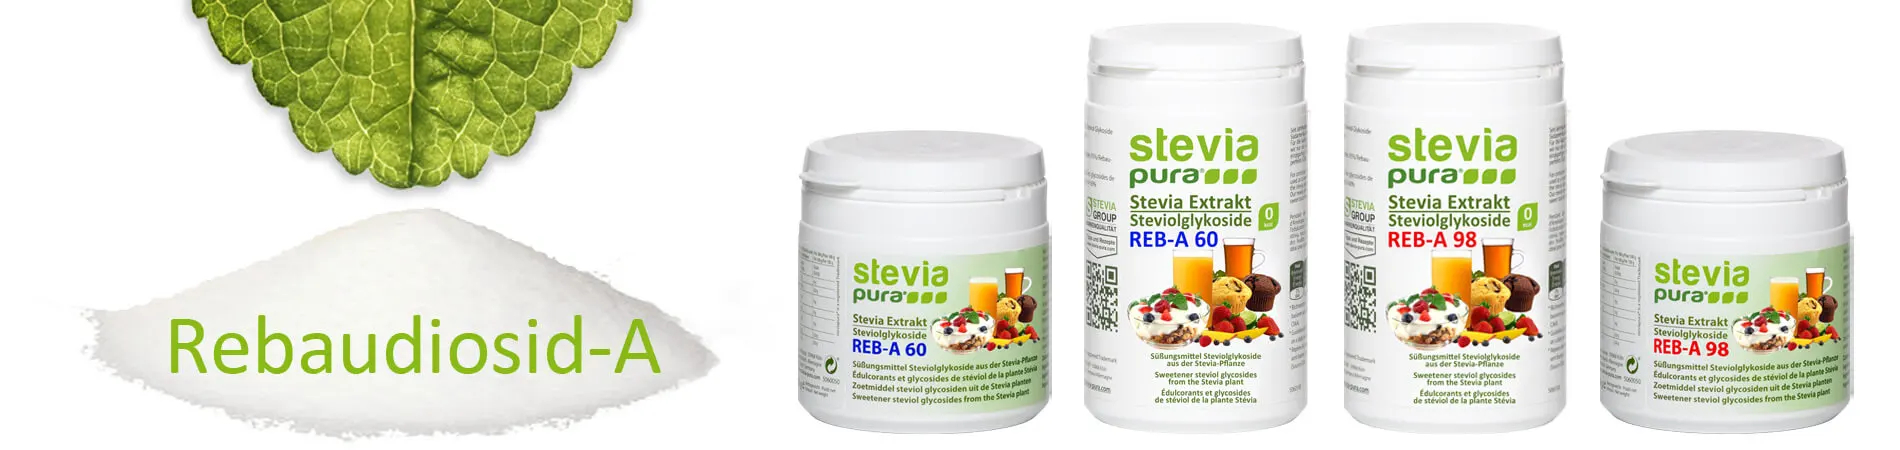 Rebaudioside-A: Puro Stevia em Pó Steviol Glycosides